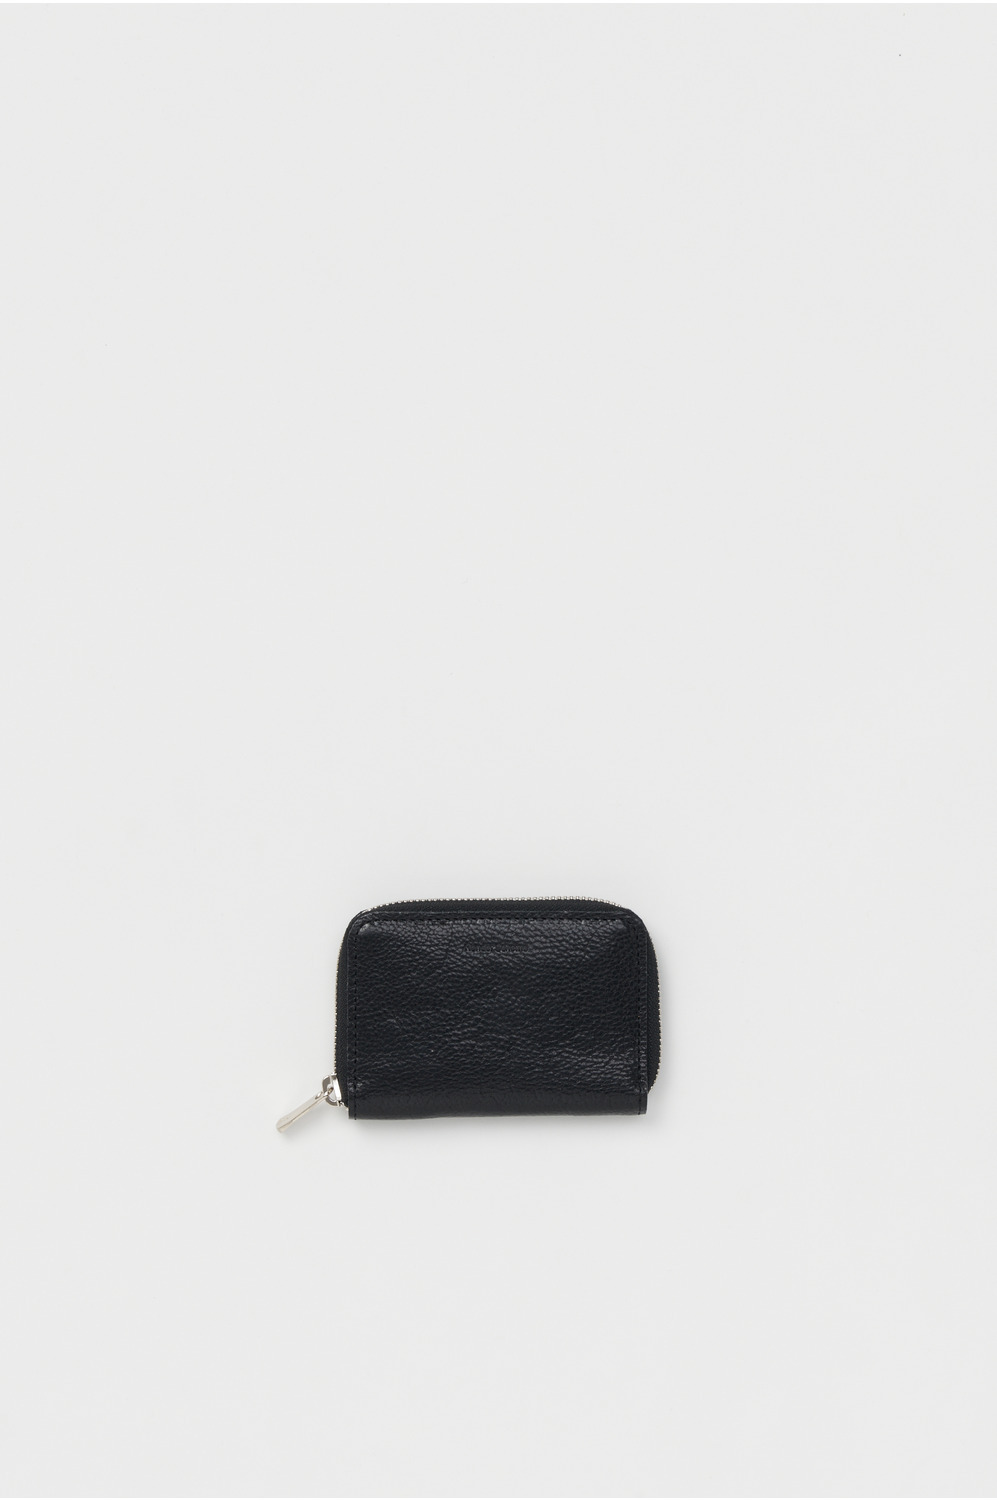 zip key purse 詳細画像 black 1